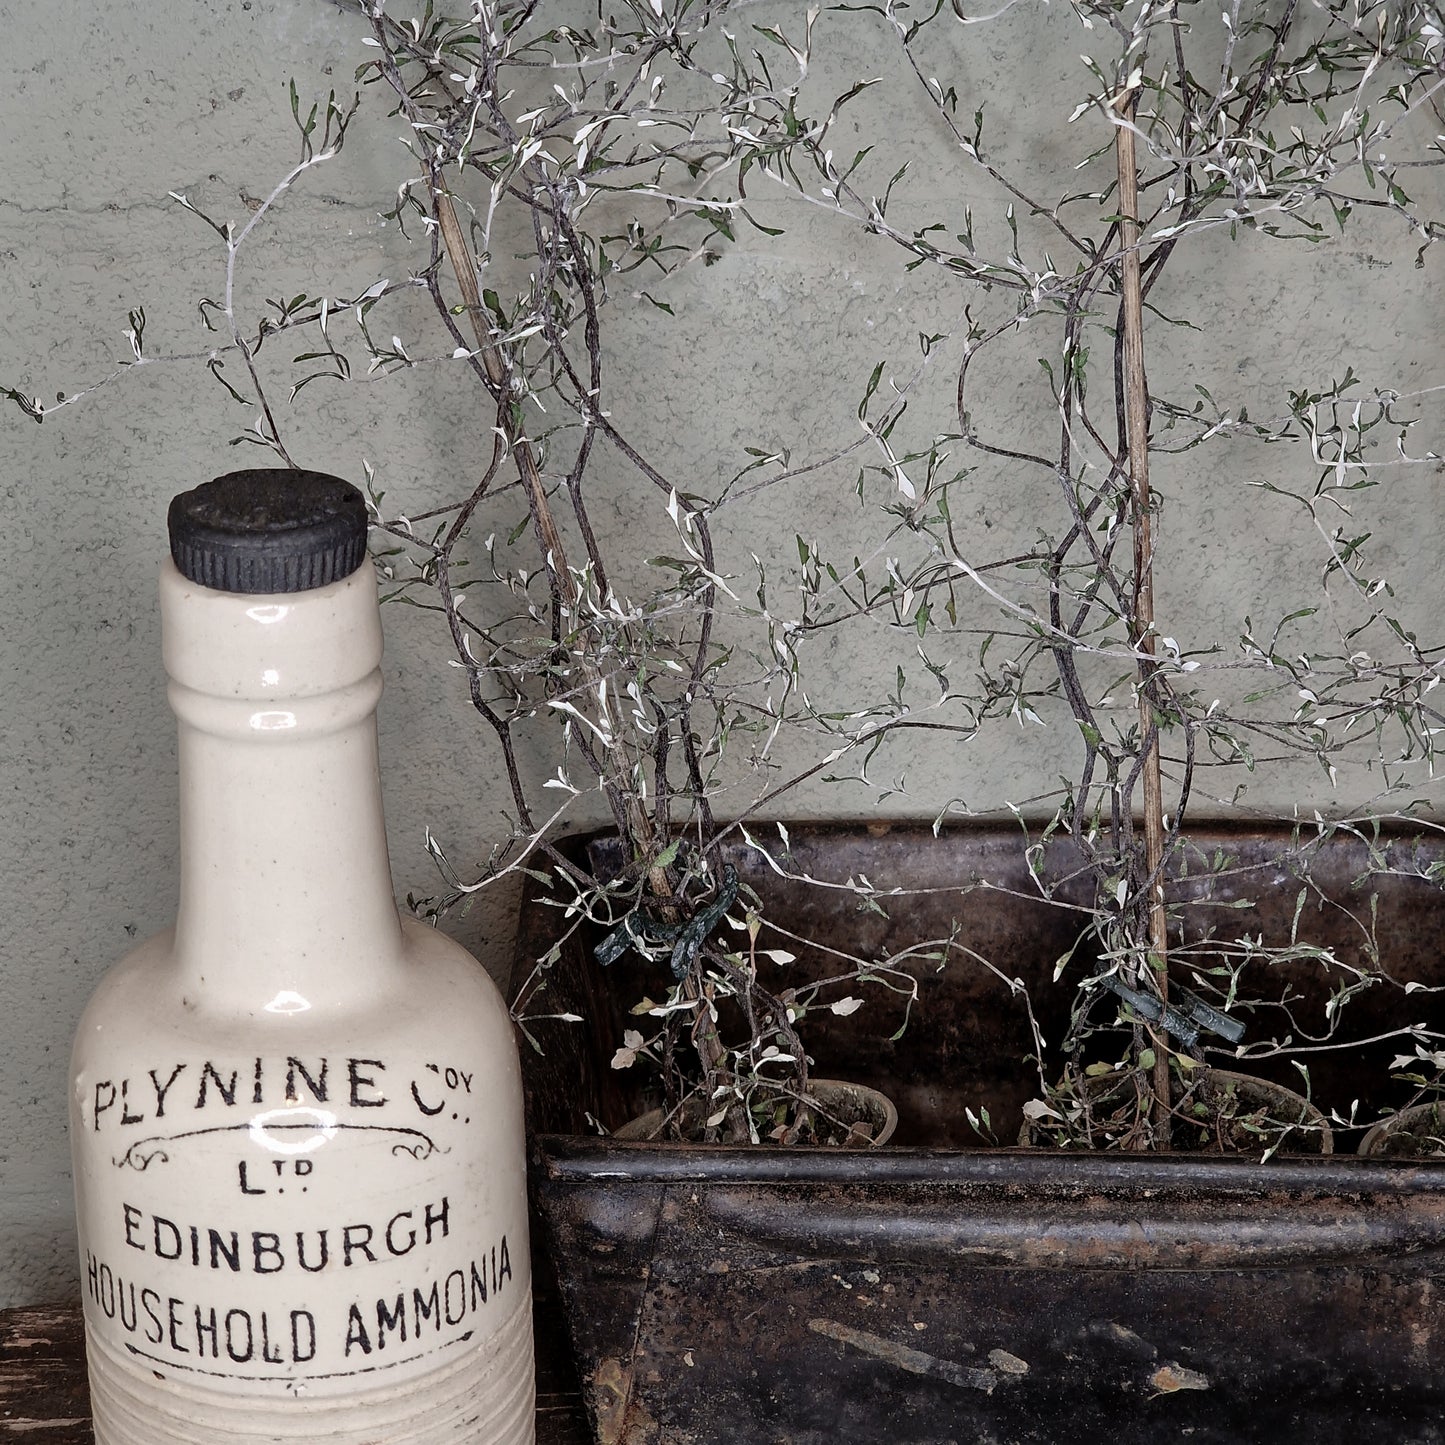 Antique household stoneware ammonia bottle